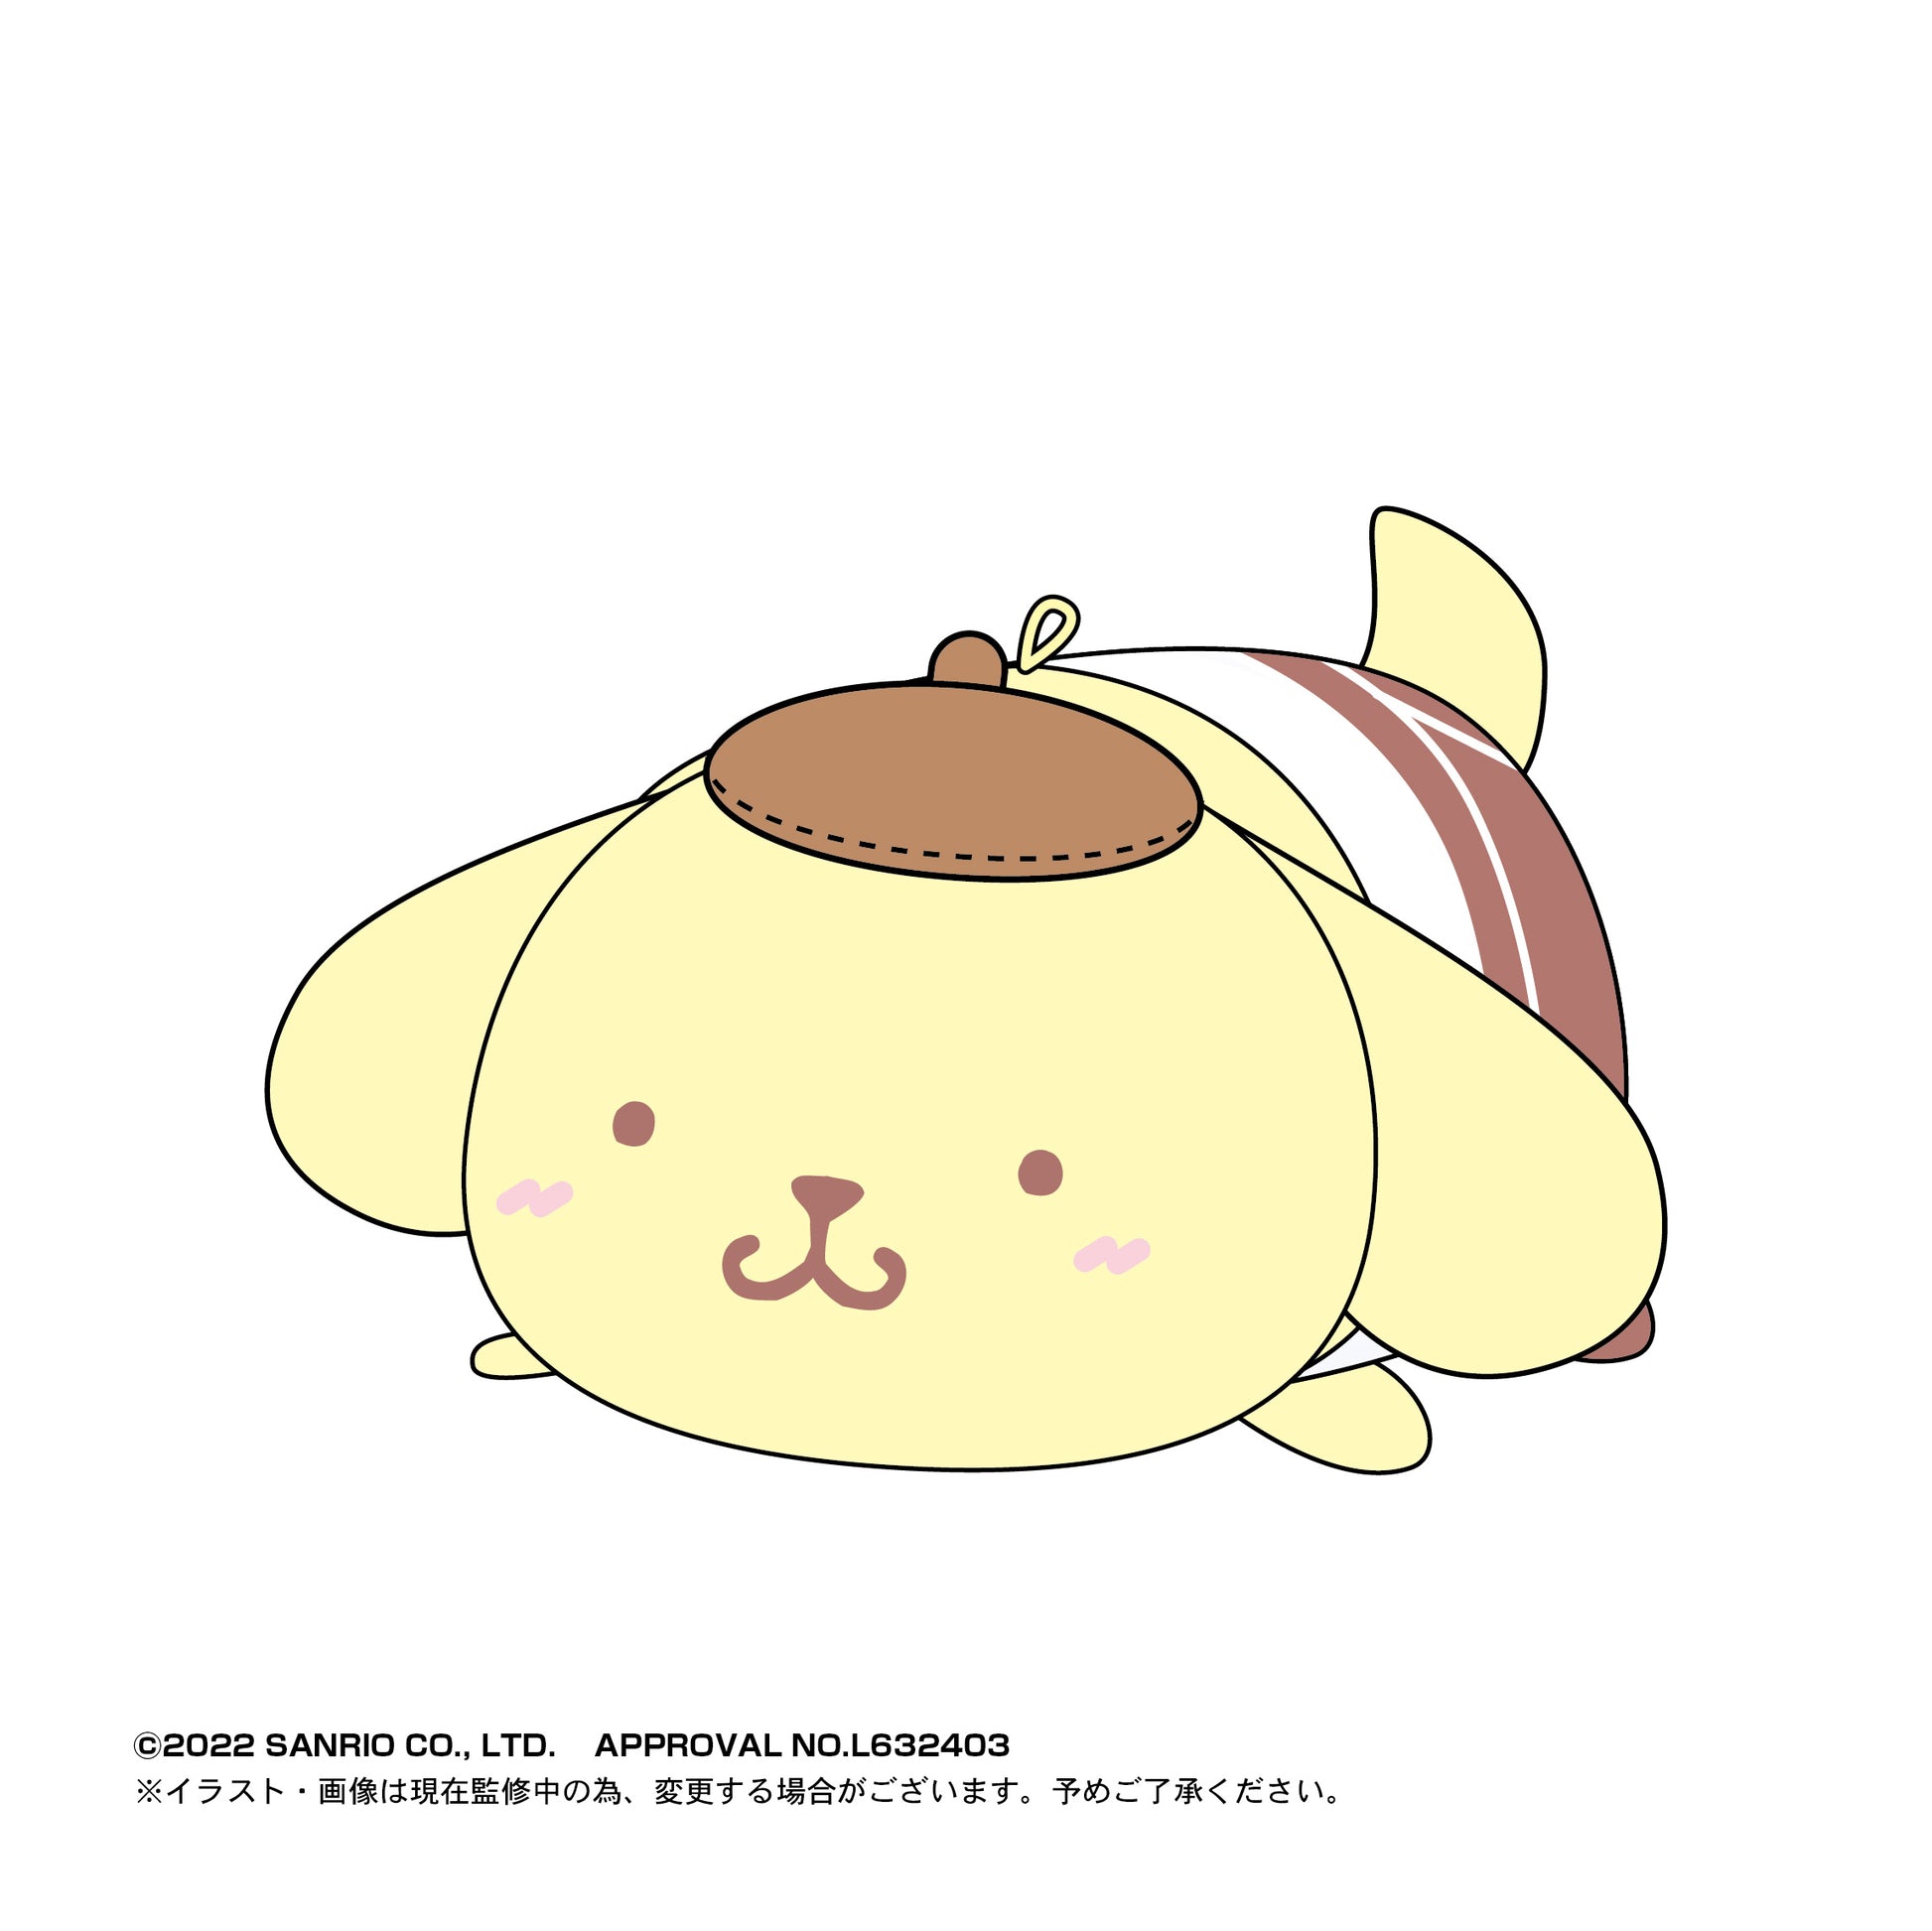 Sanrio Characters PoteKoro Mascot Plush Vol.3 – Otaku Owlet